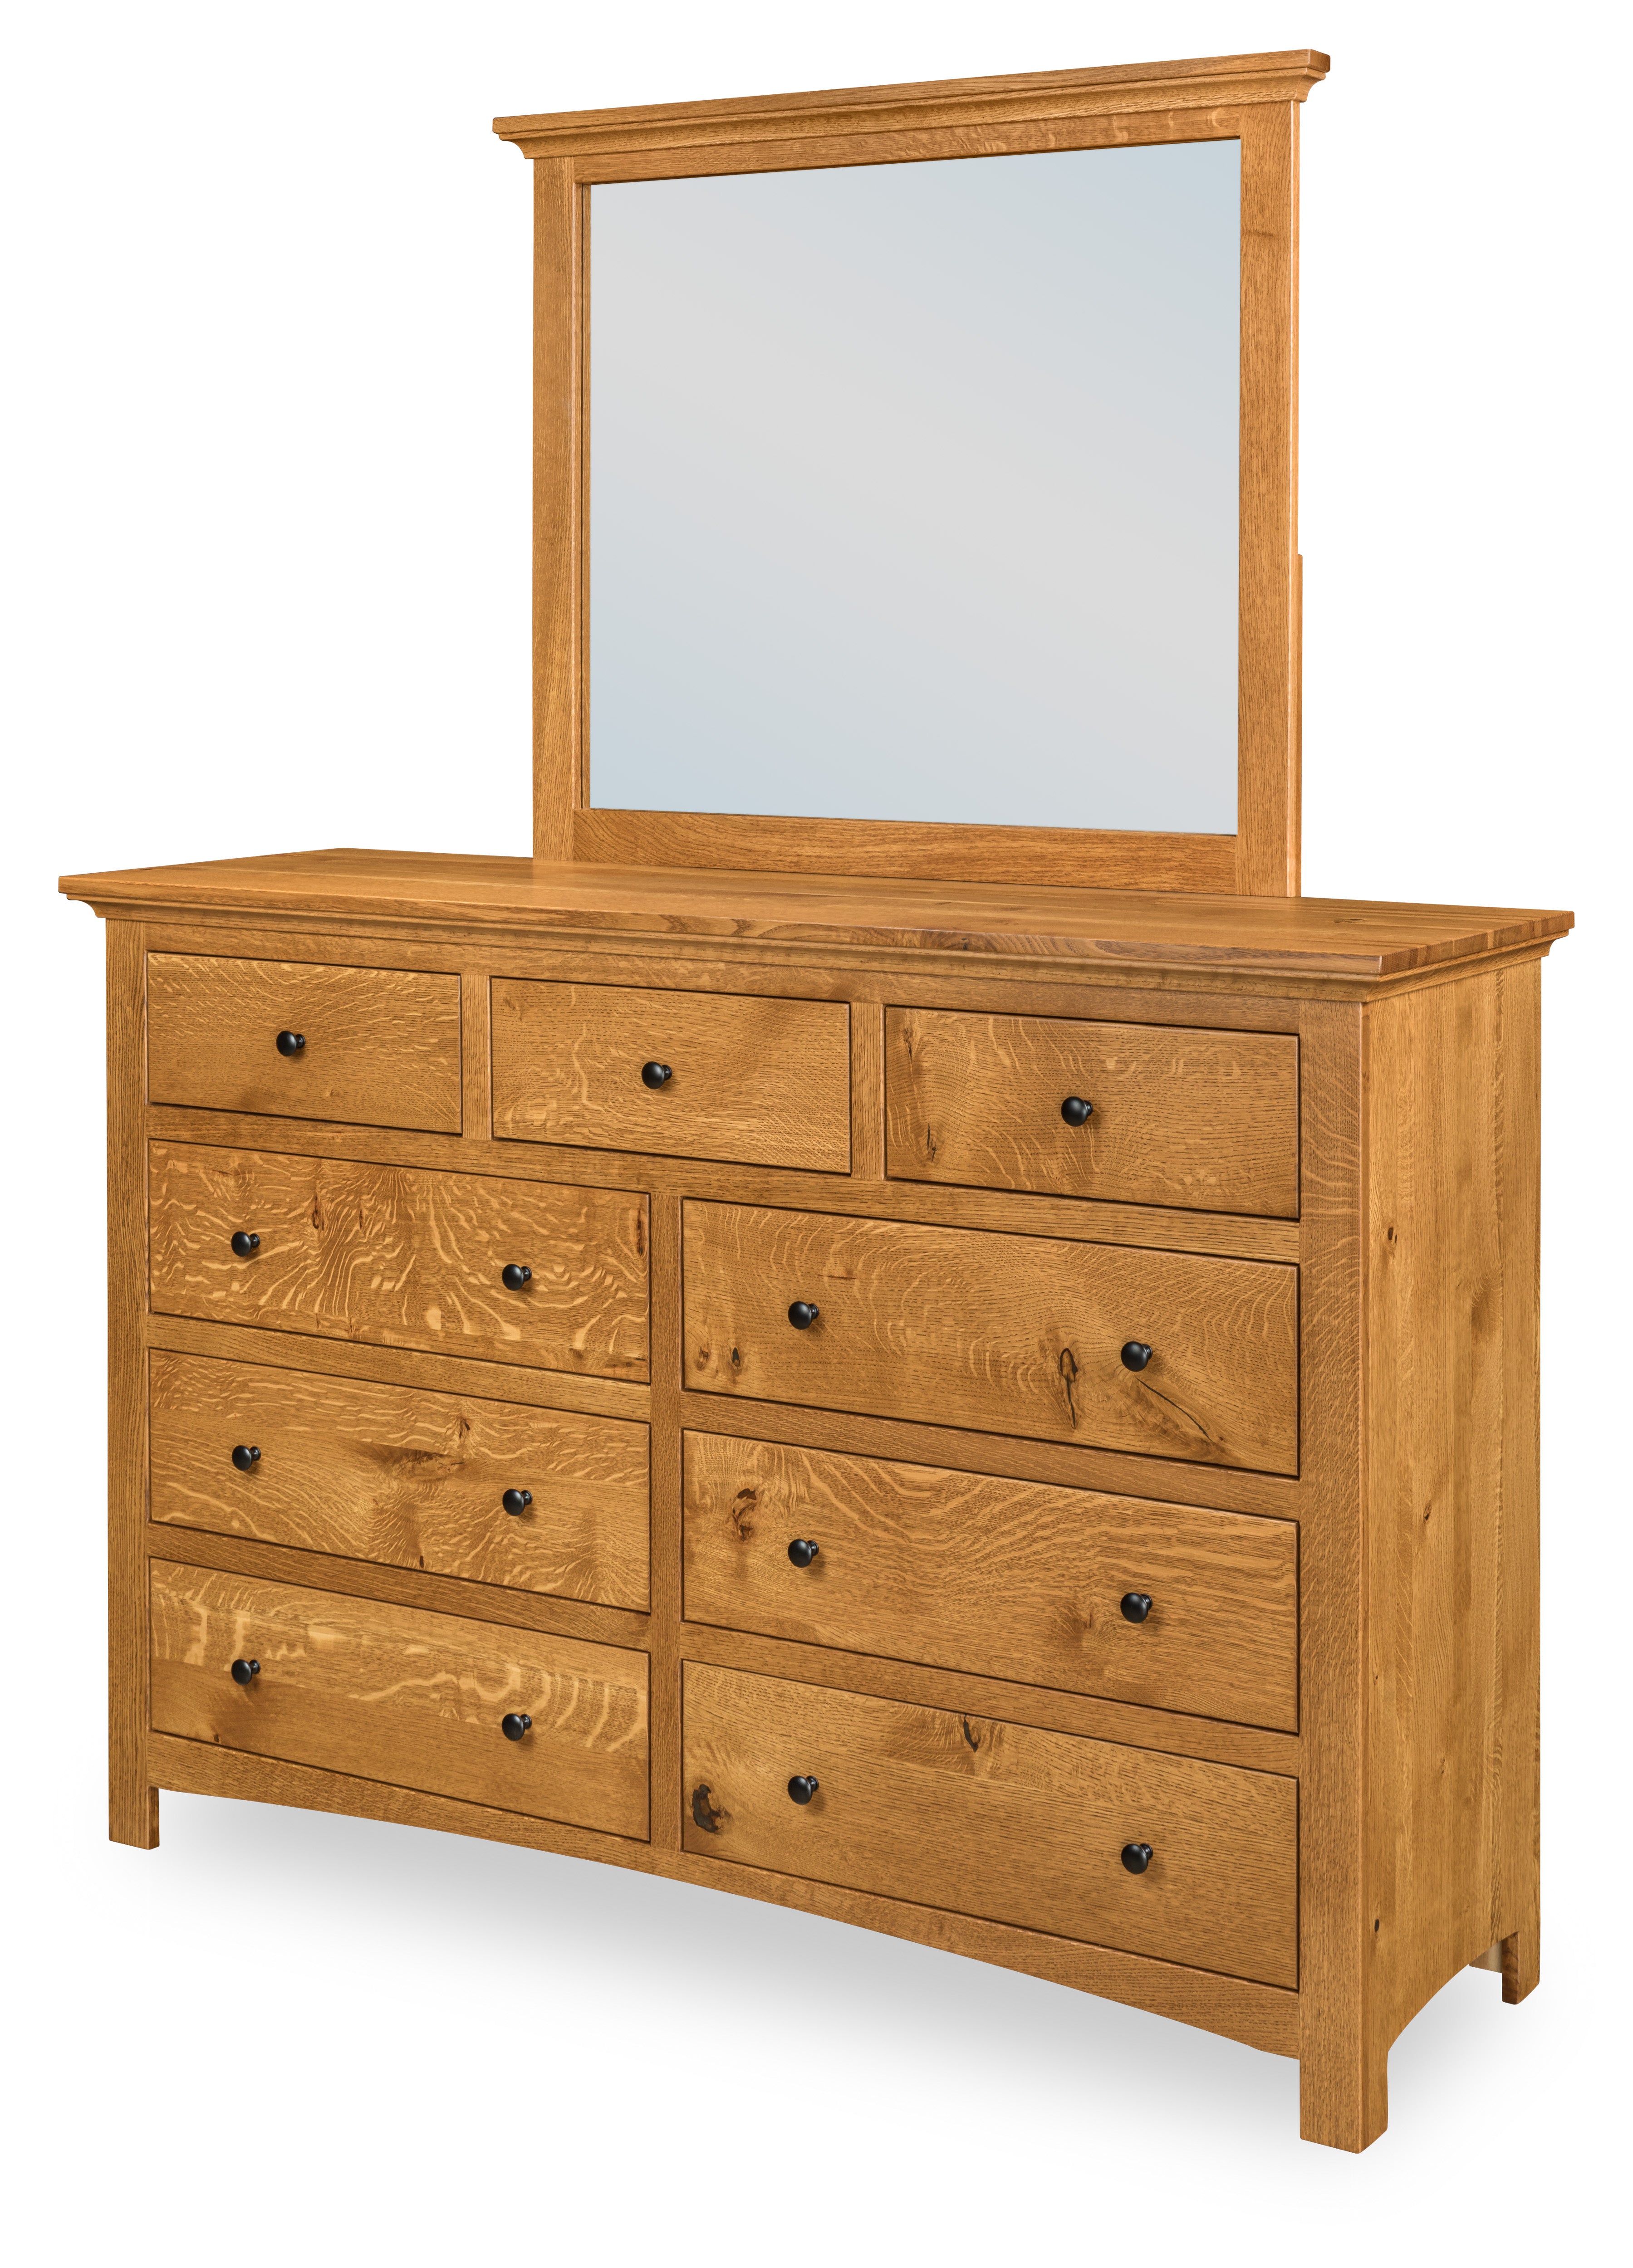 camden tall dresser in rustic quartersawn wood with medium walnut stain